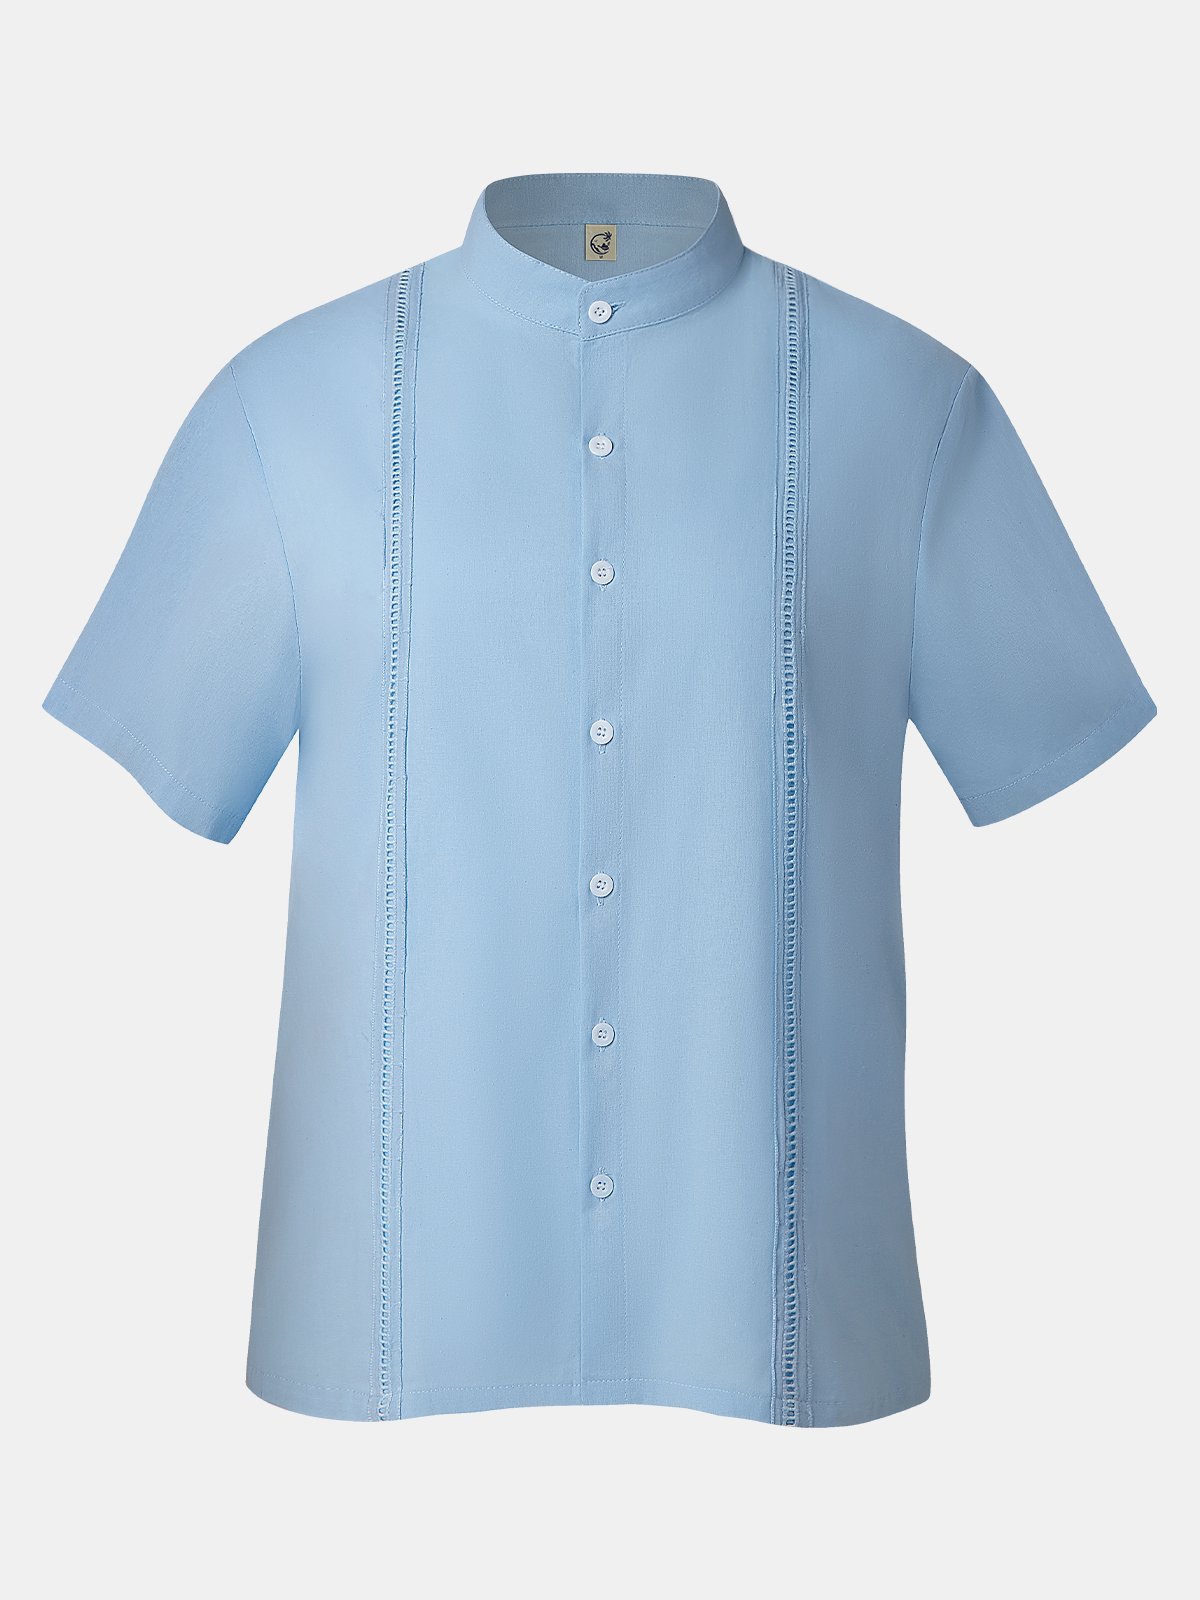 Mens Cotton Stand Collar Short Sleeve Shirt 65%Cotton